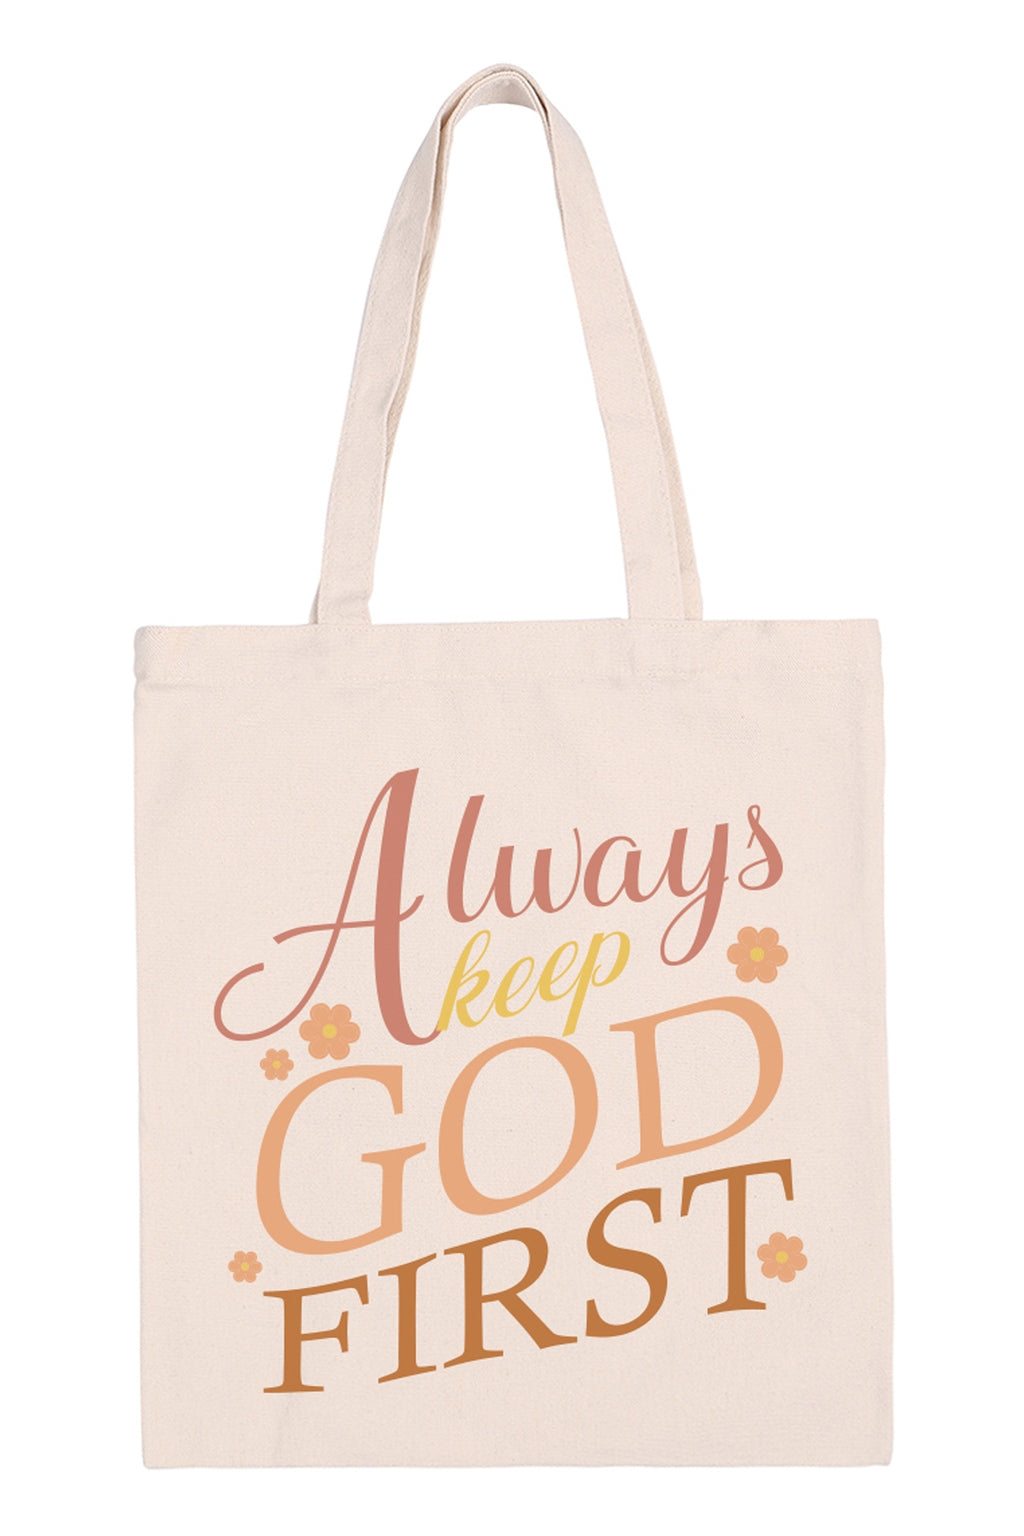 Always Keep God First Print Tote Bag - Pack of 6